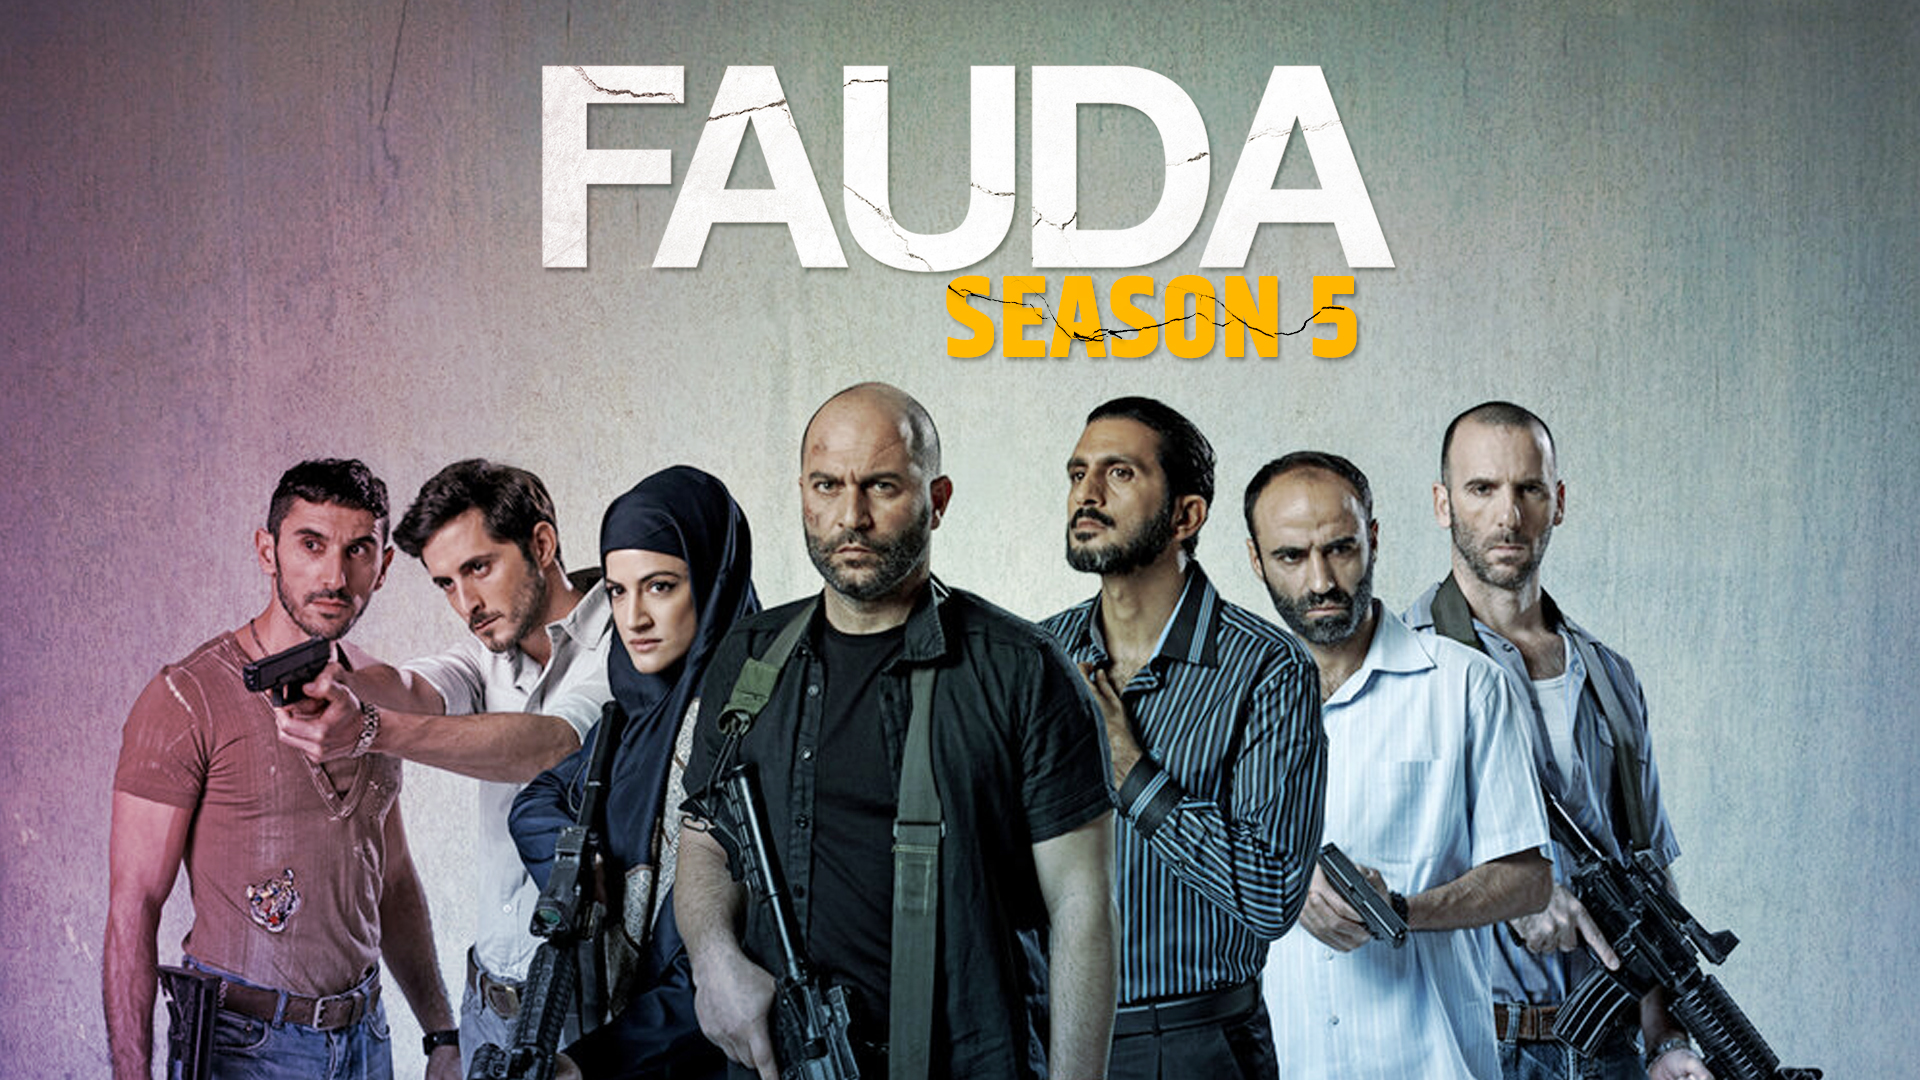 fauda season 5 release date Daily Research Plot